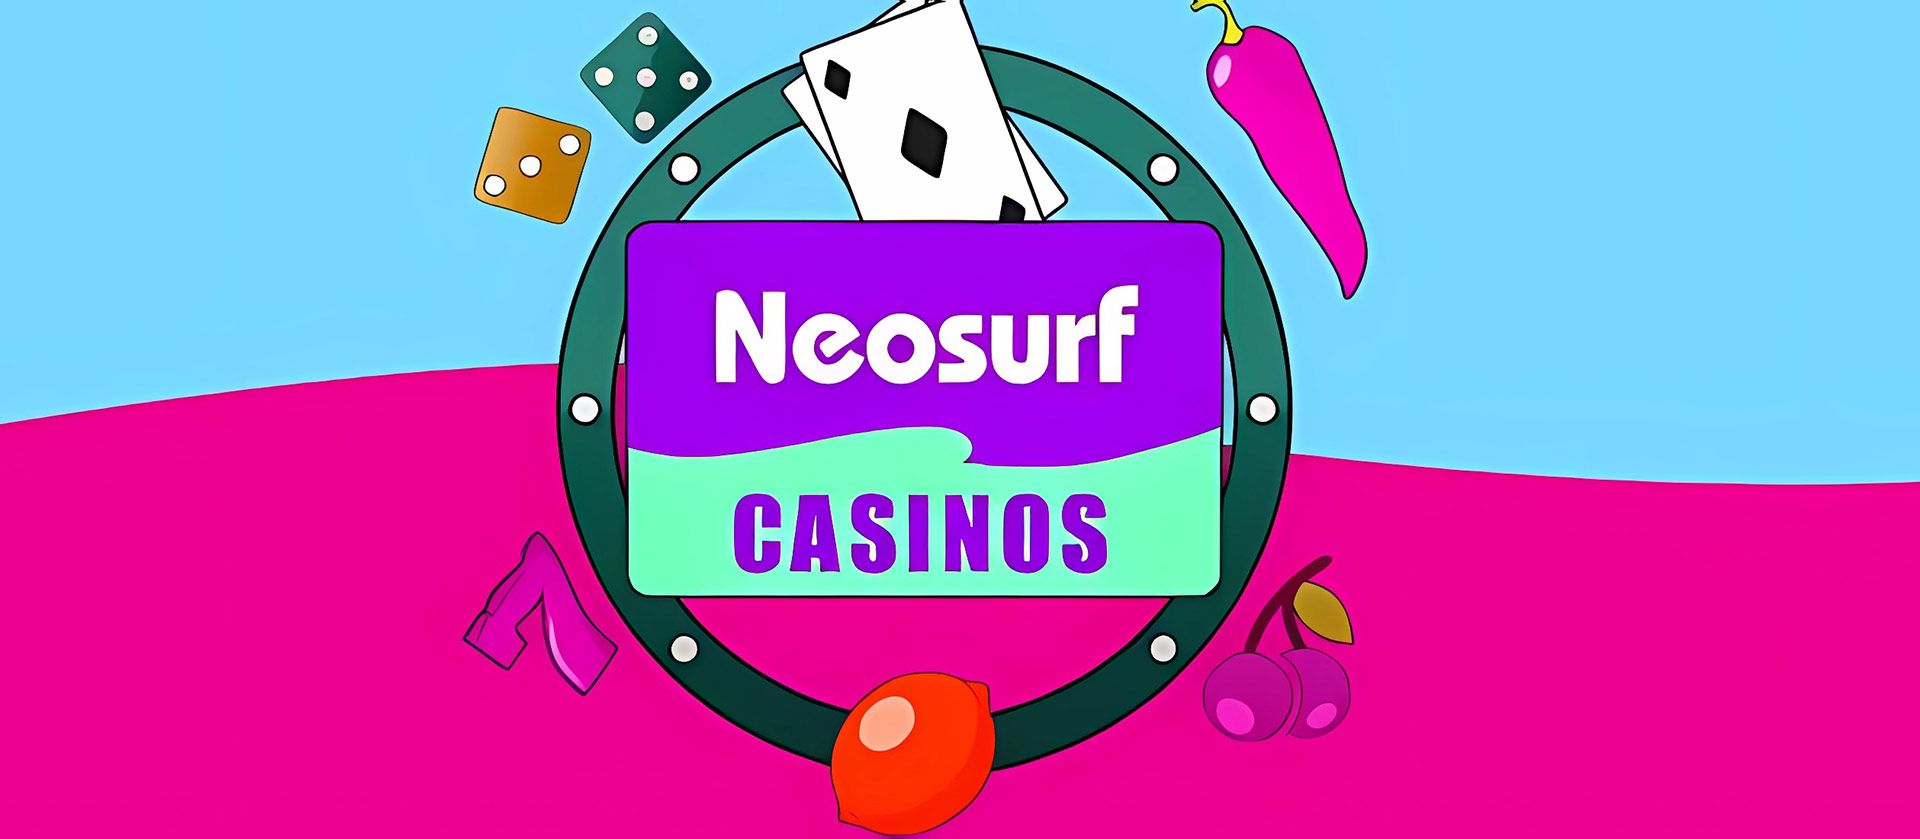 Neosurf slots at casinos in New Zealand.